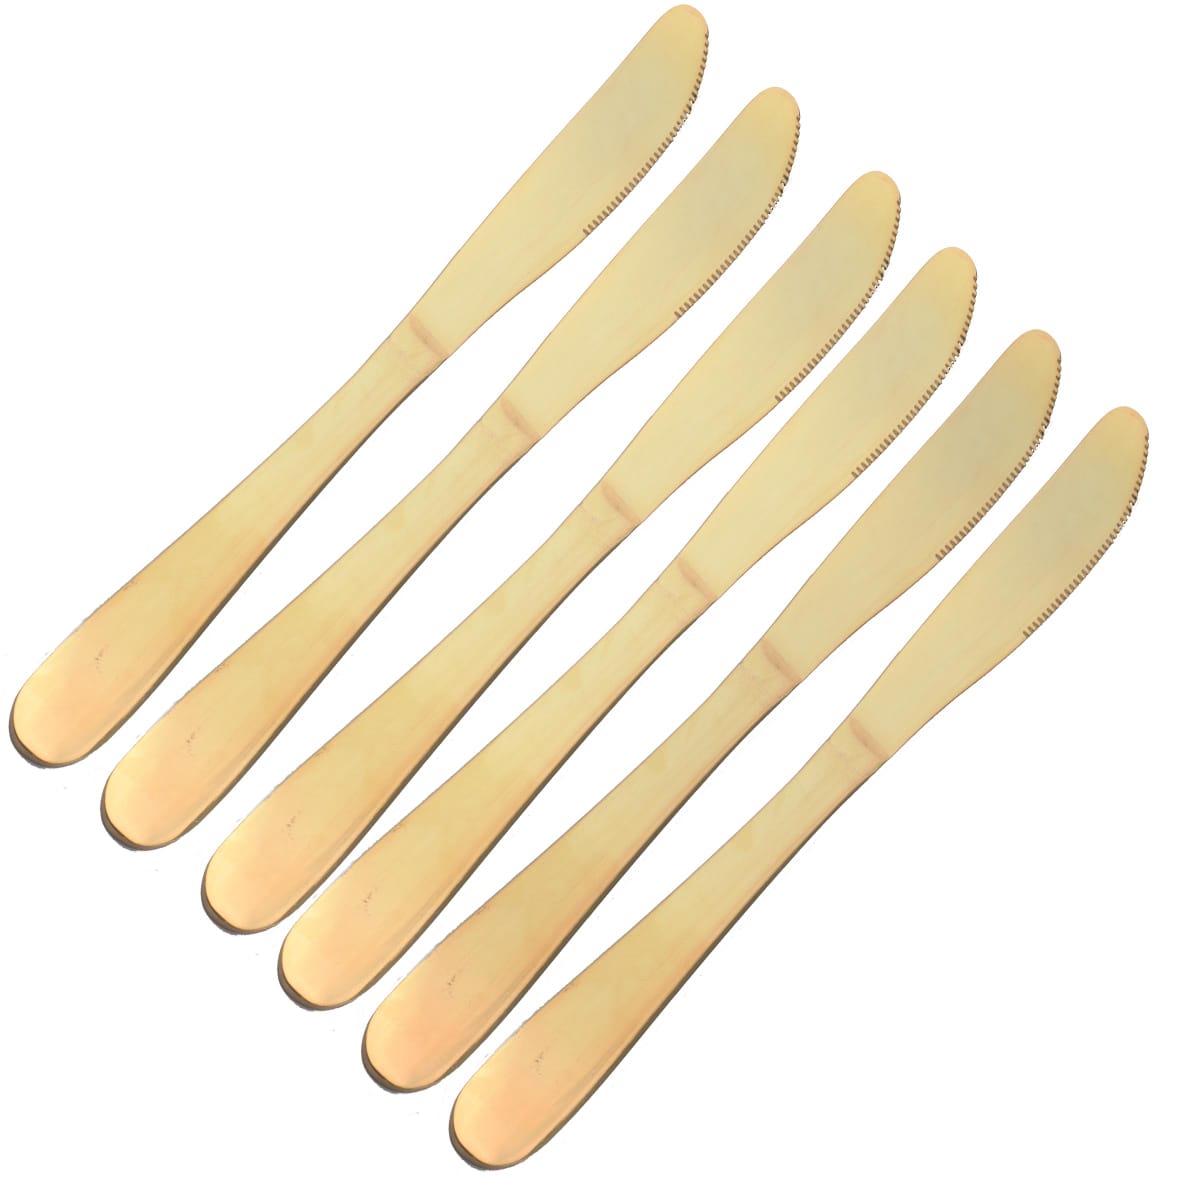 Knifes Teardrop Gold Stainless Steel 6pcs